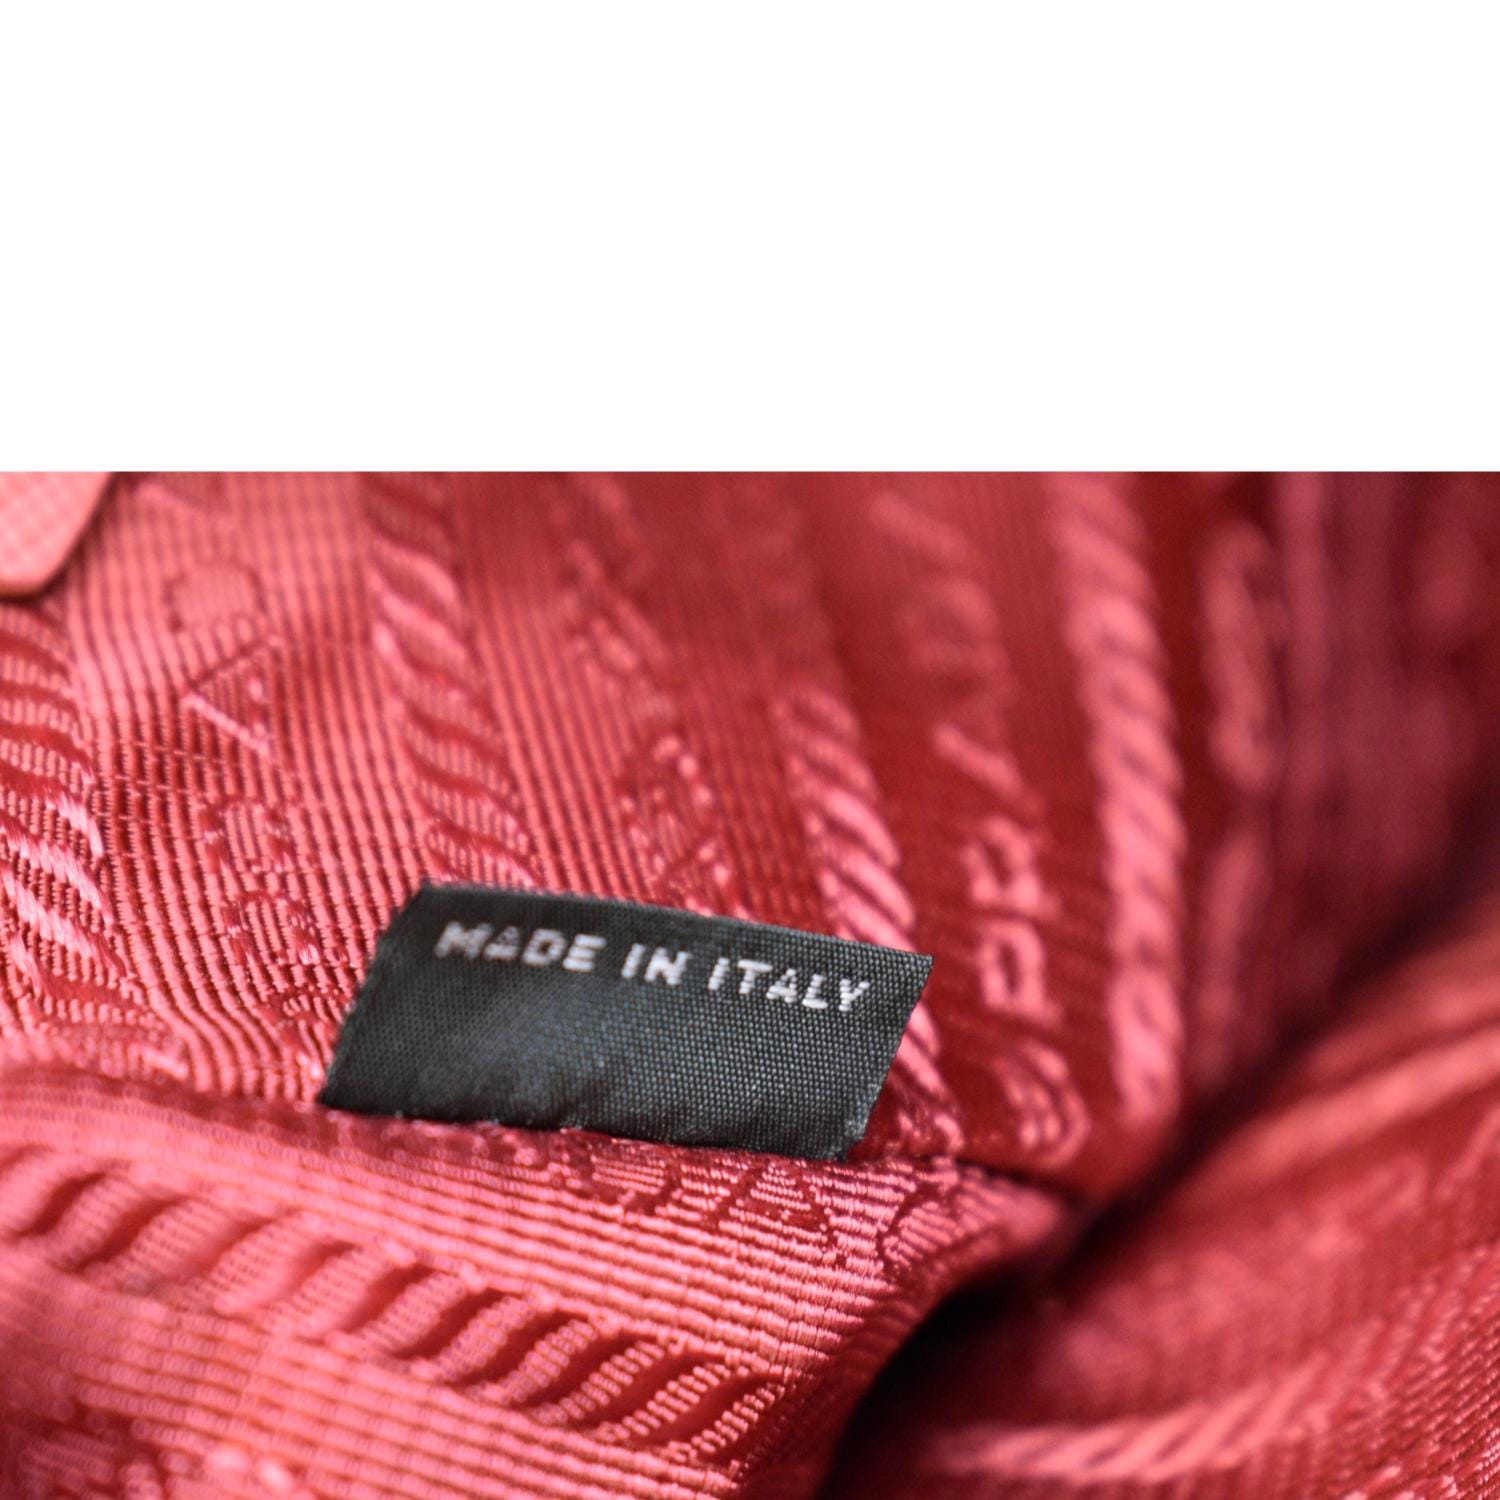 Prada Small Saffiano Leather Tote hang bag BN2567 Light Pink